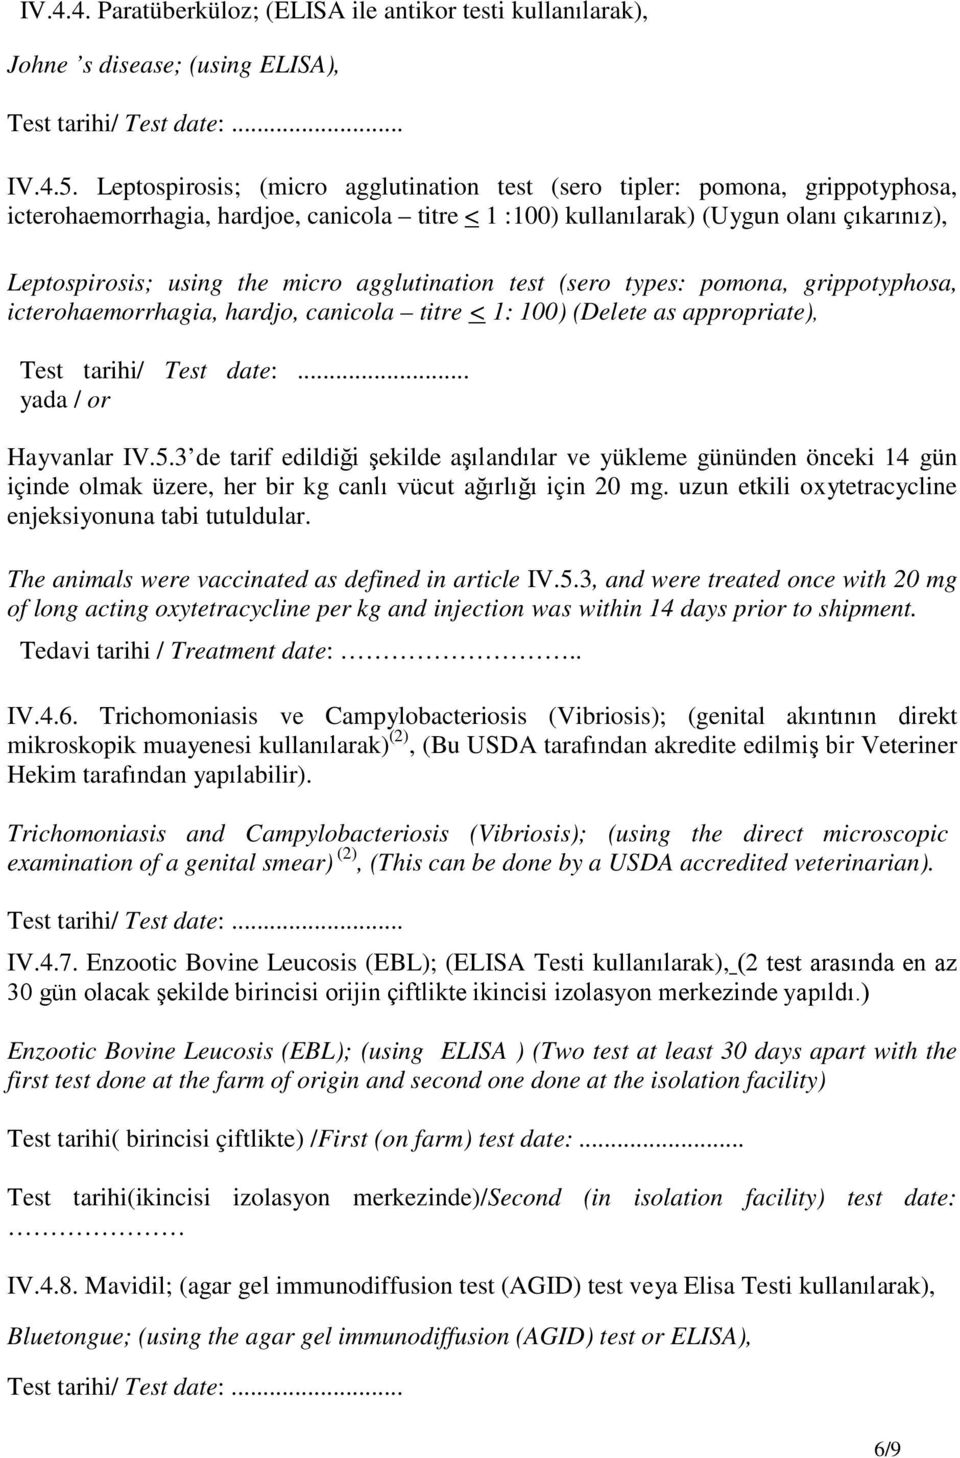 micro agglutination test (sero types: pomona, grippotyphosa, icterohaemorrhagia, hardjo, canicola titre < 1: 100) (Delete as appropriate), yada / or Hayvanlar IV.5.